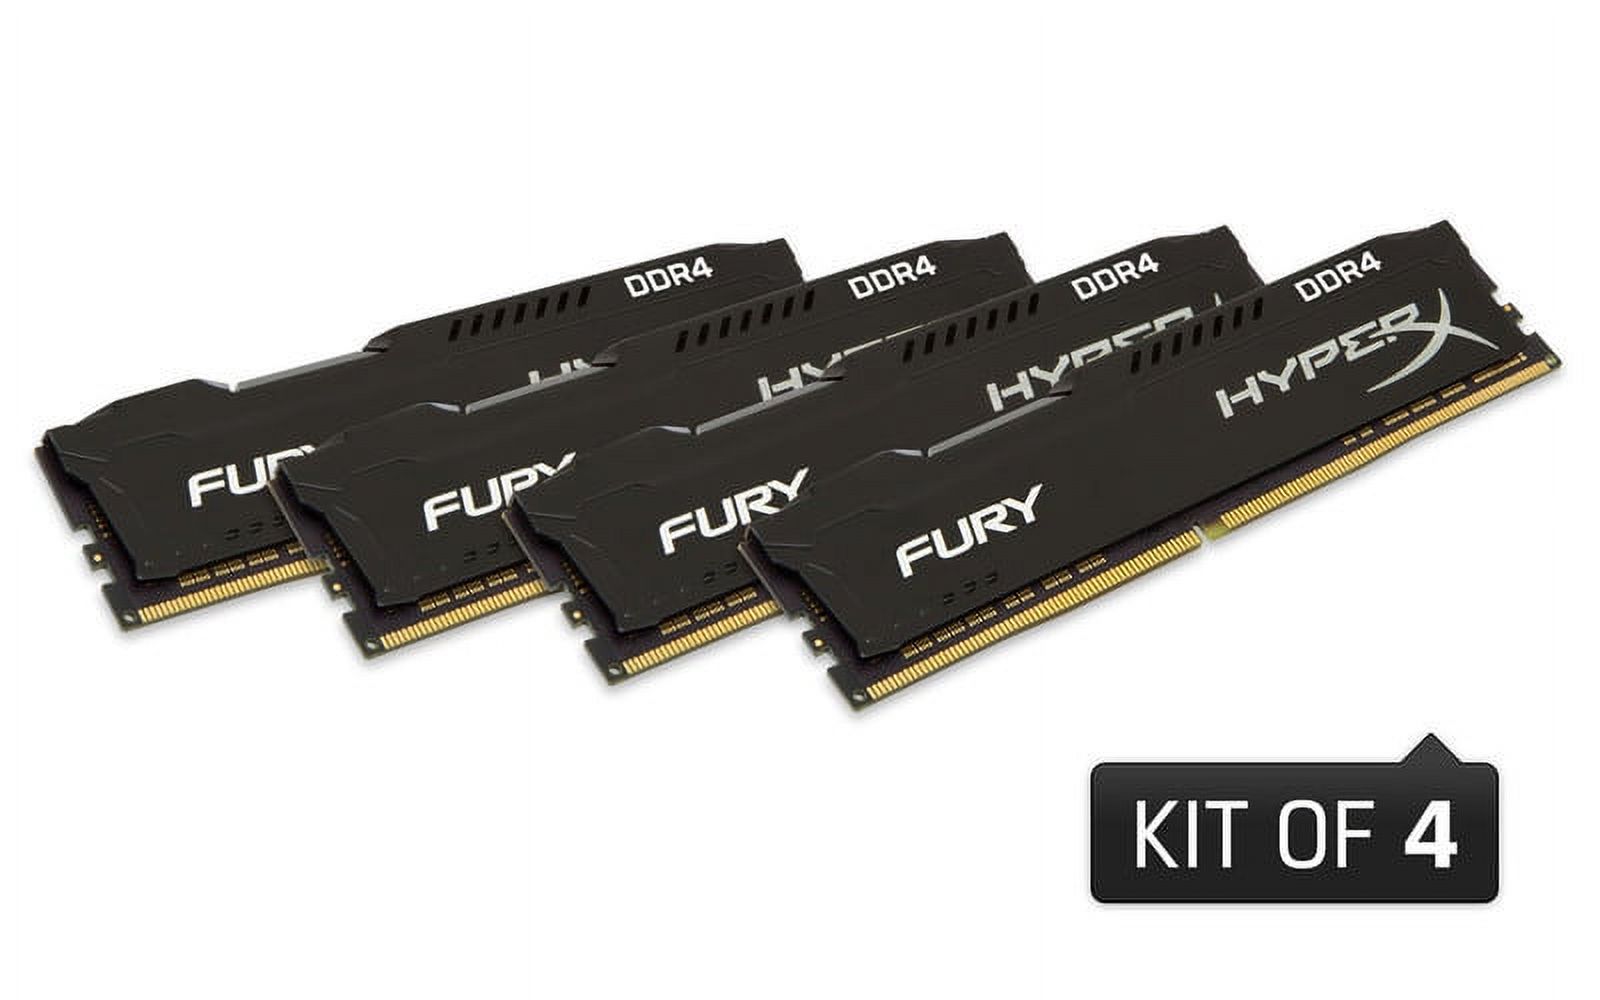 HyperX FURY Memory Black 16GB 2666MHz DDR4 CL15 DIMM (Kit of 4) HX426C15FBK4/16 - image 1 of 2